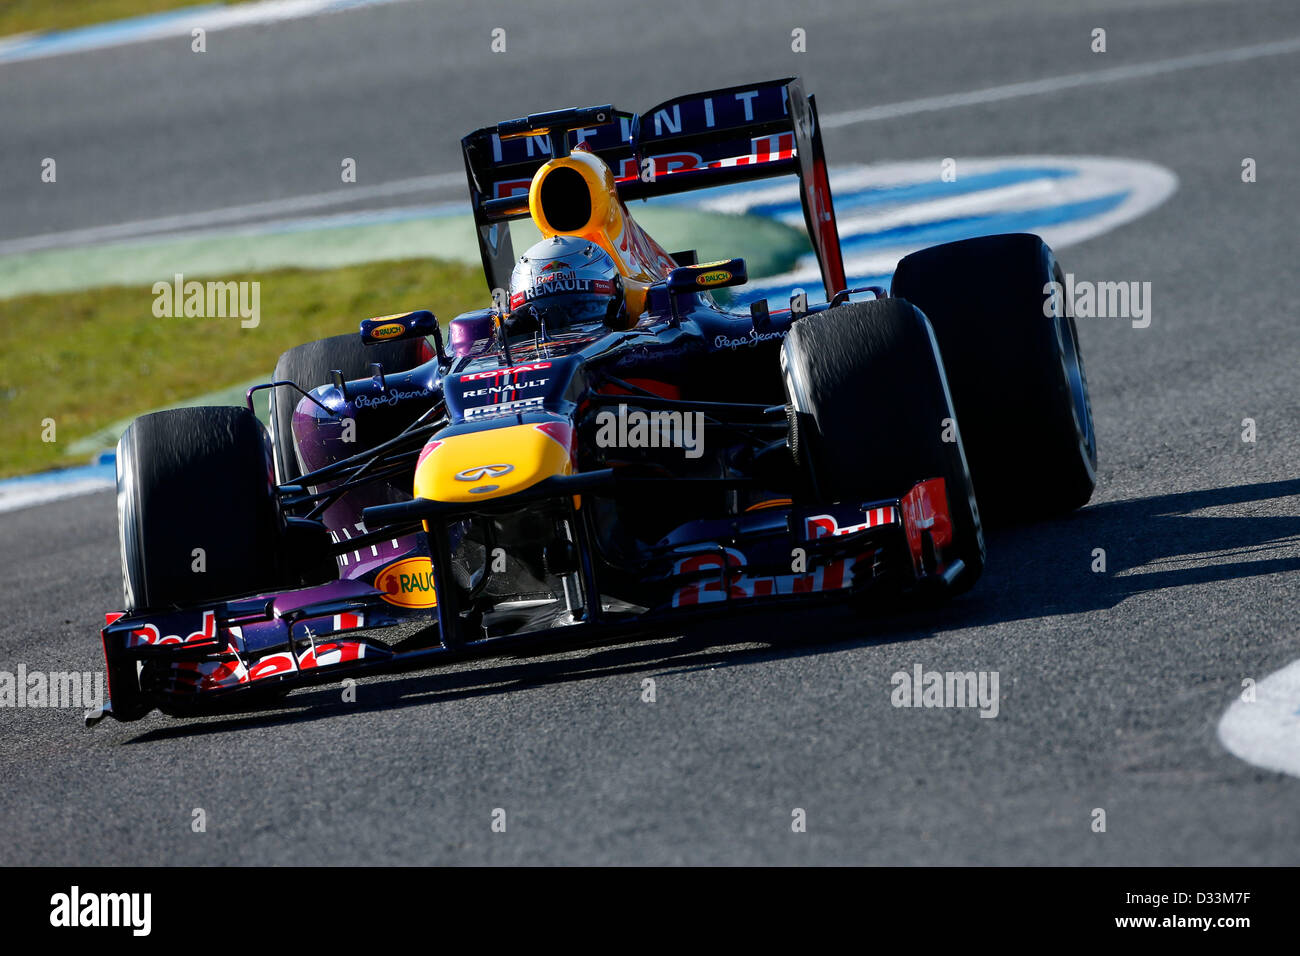 Motorsports: FIA Formula One World Championship 2013, F1 test Jerez, #1 Sebastian Vettel (GER, Red Bull Racing), Stock Photo